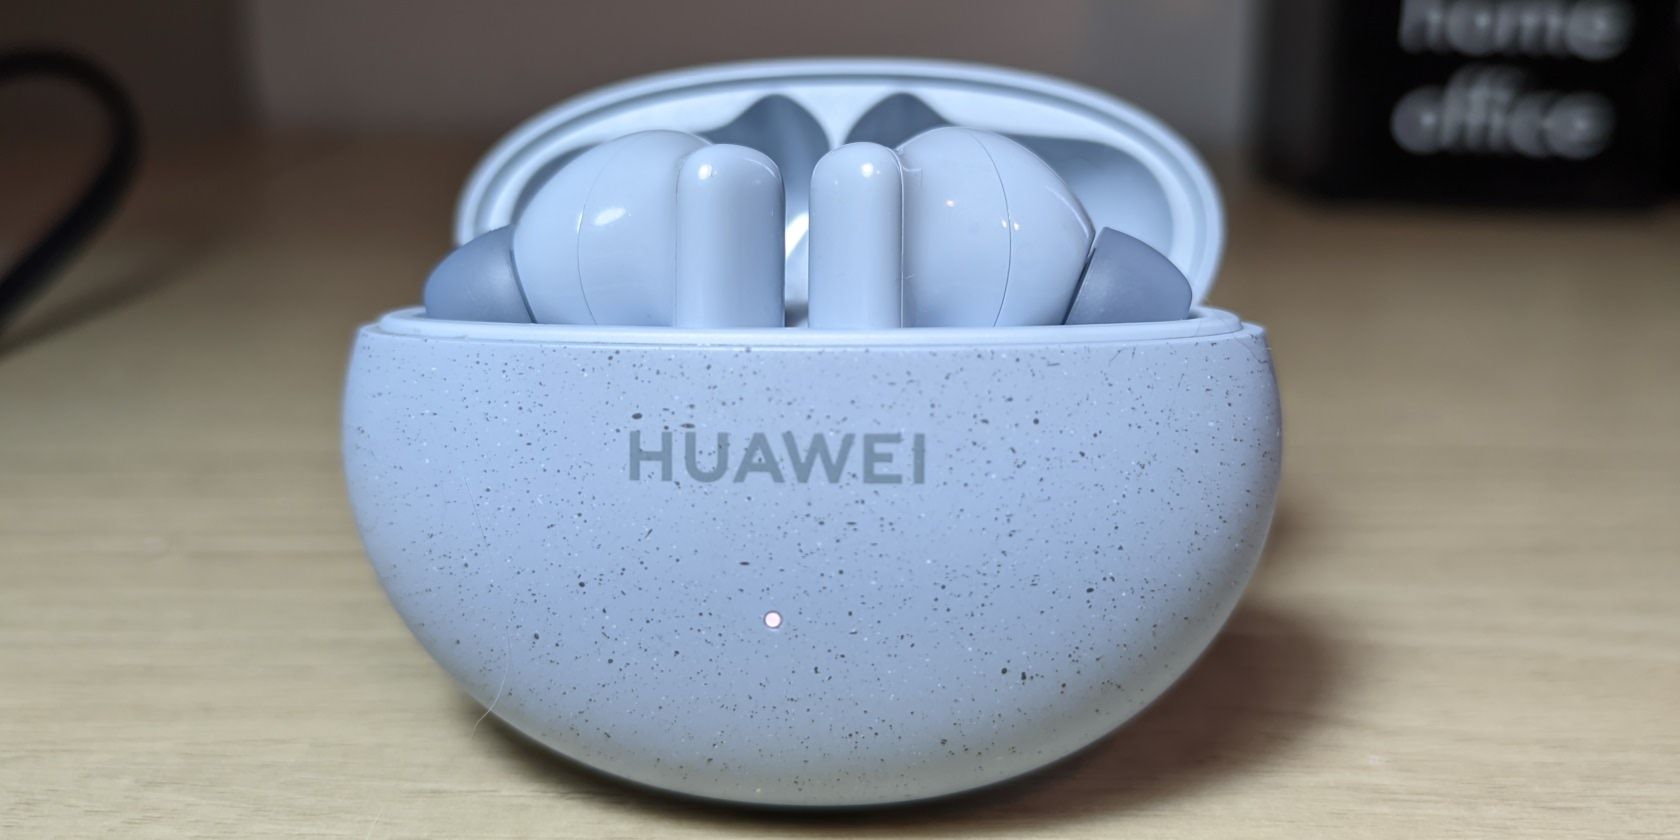 Huawei Freebuds 5i review – good sound, terrible controls - Galaxus